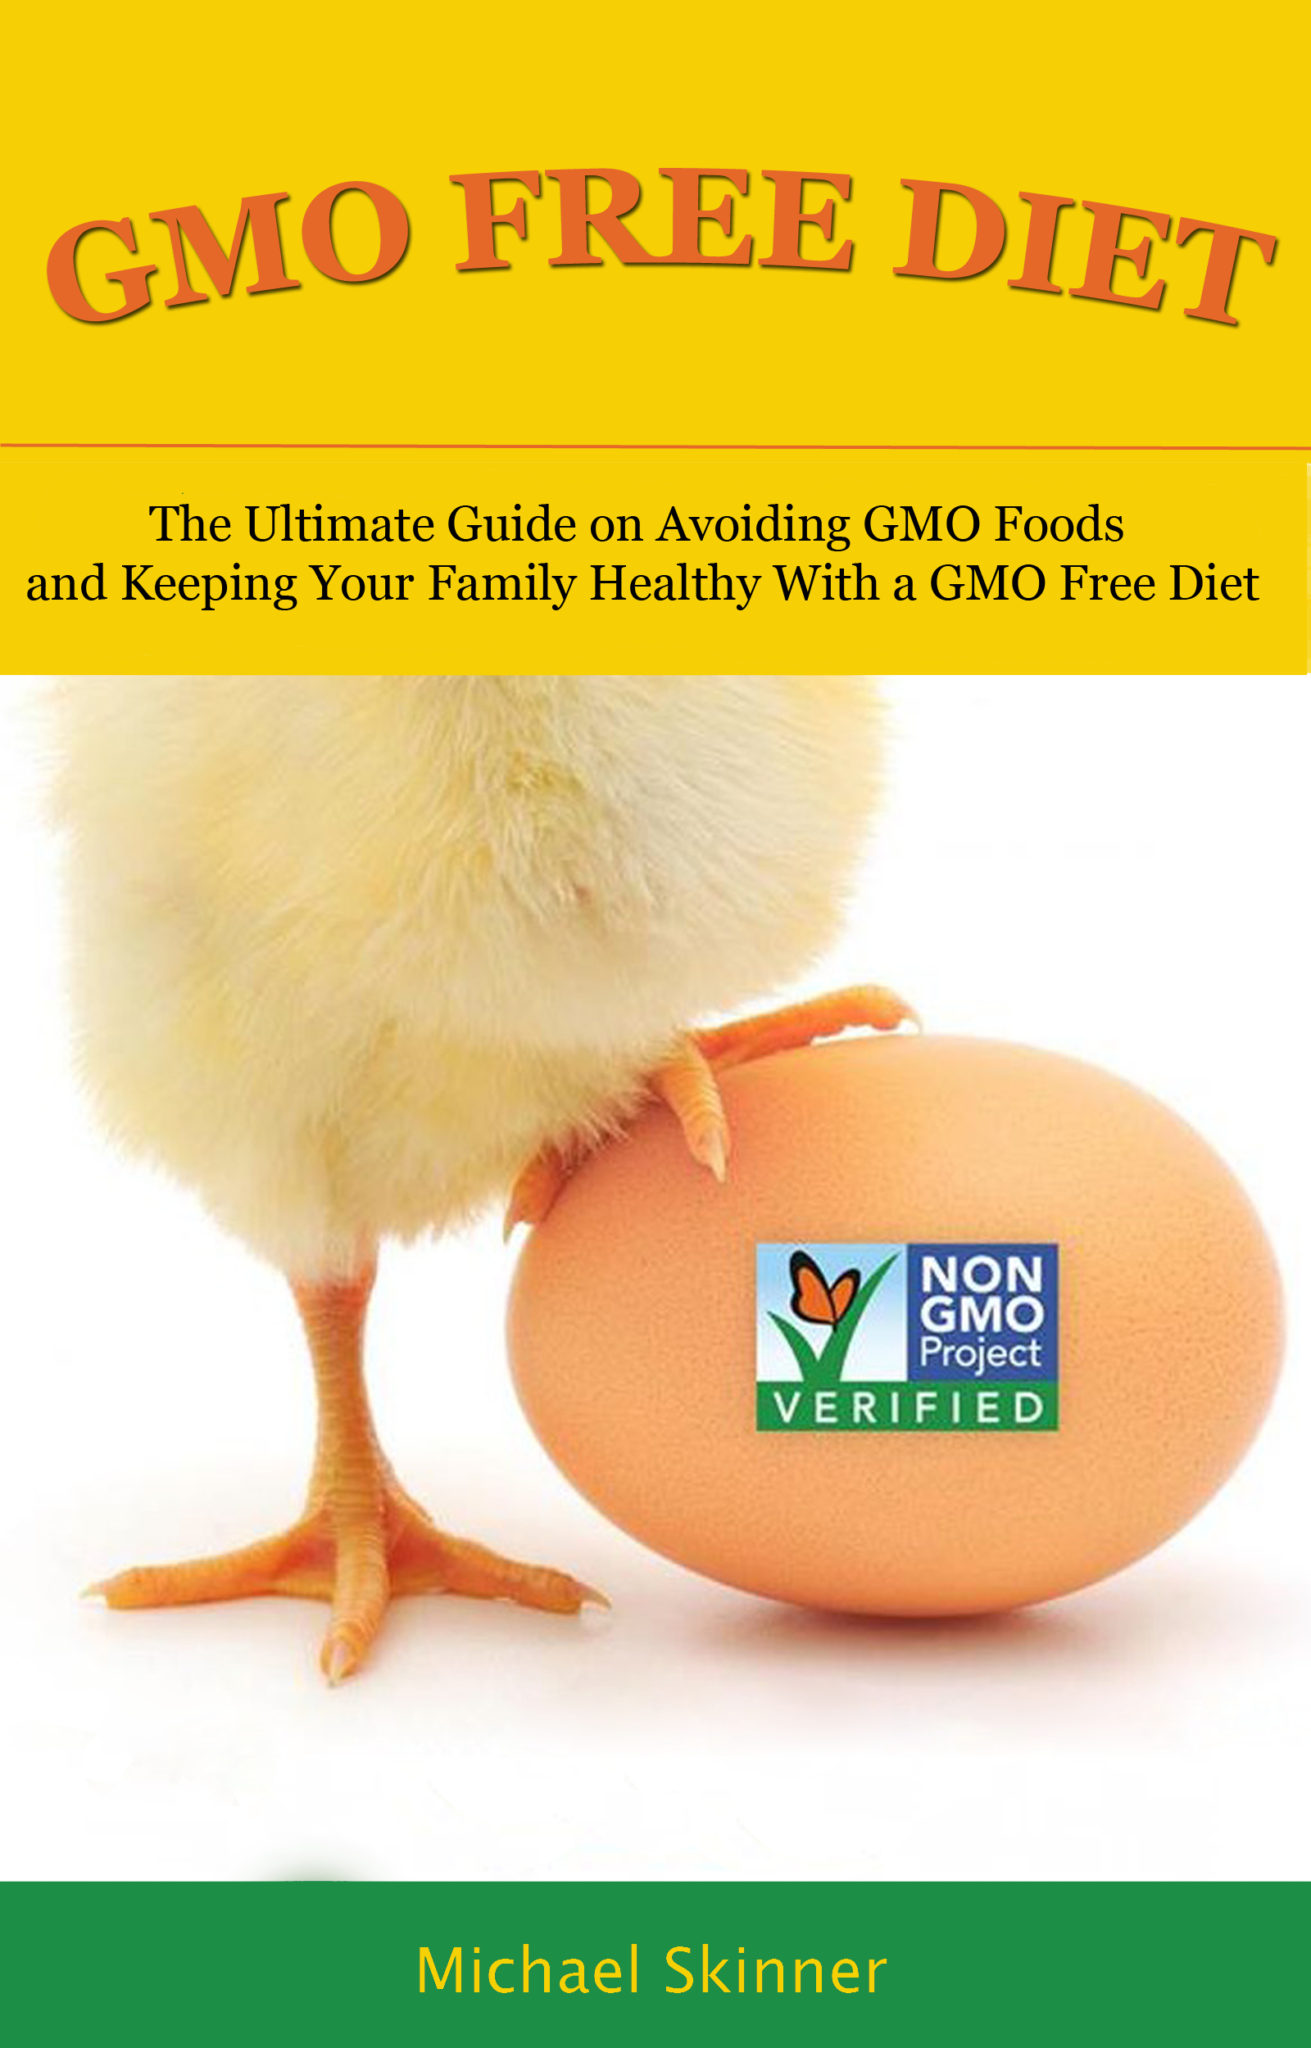 FREE: GMO Free Diet by Michael Skinner